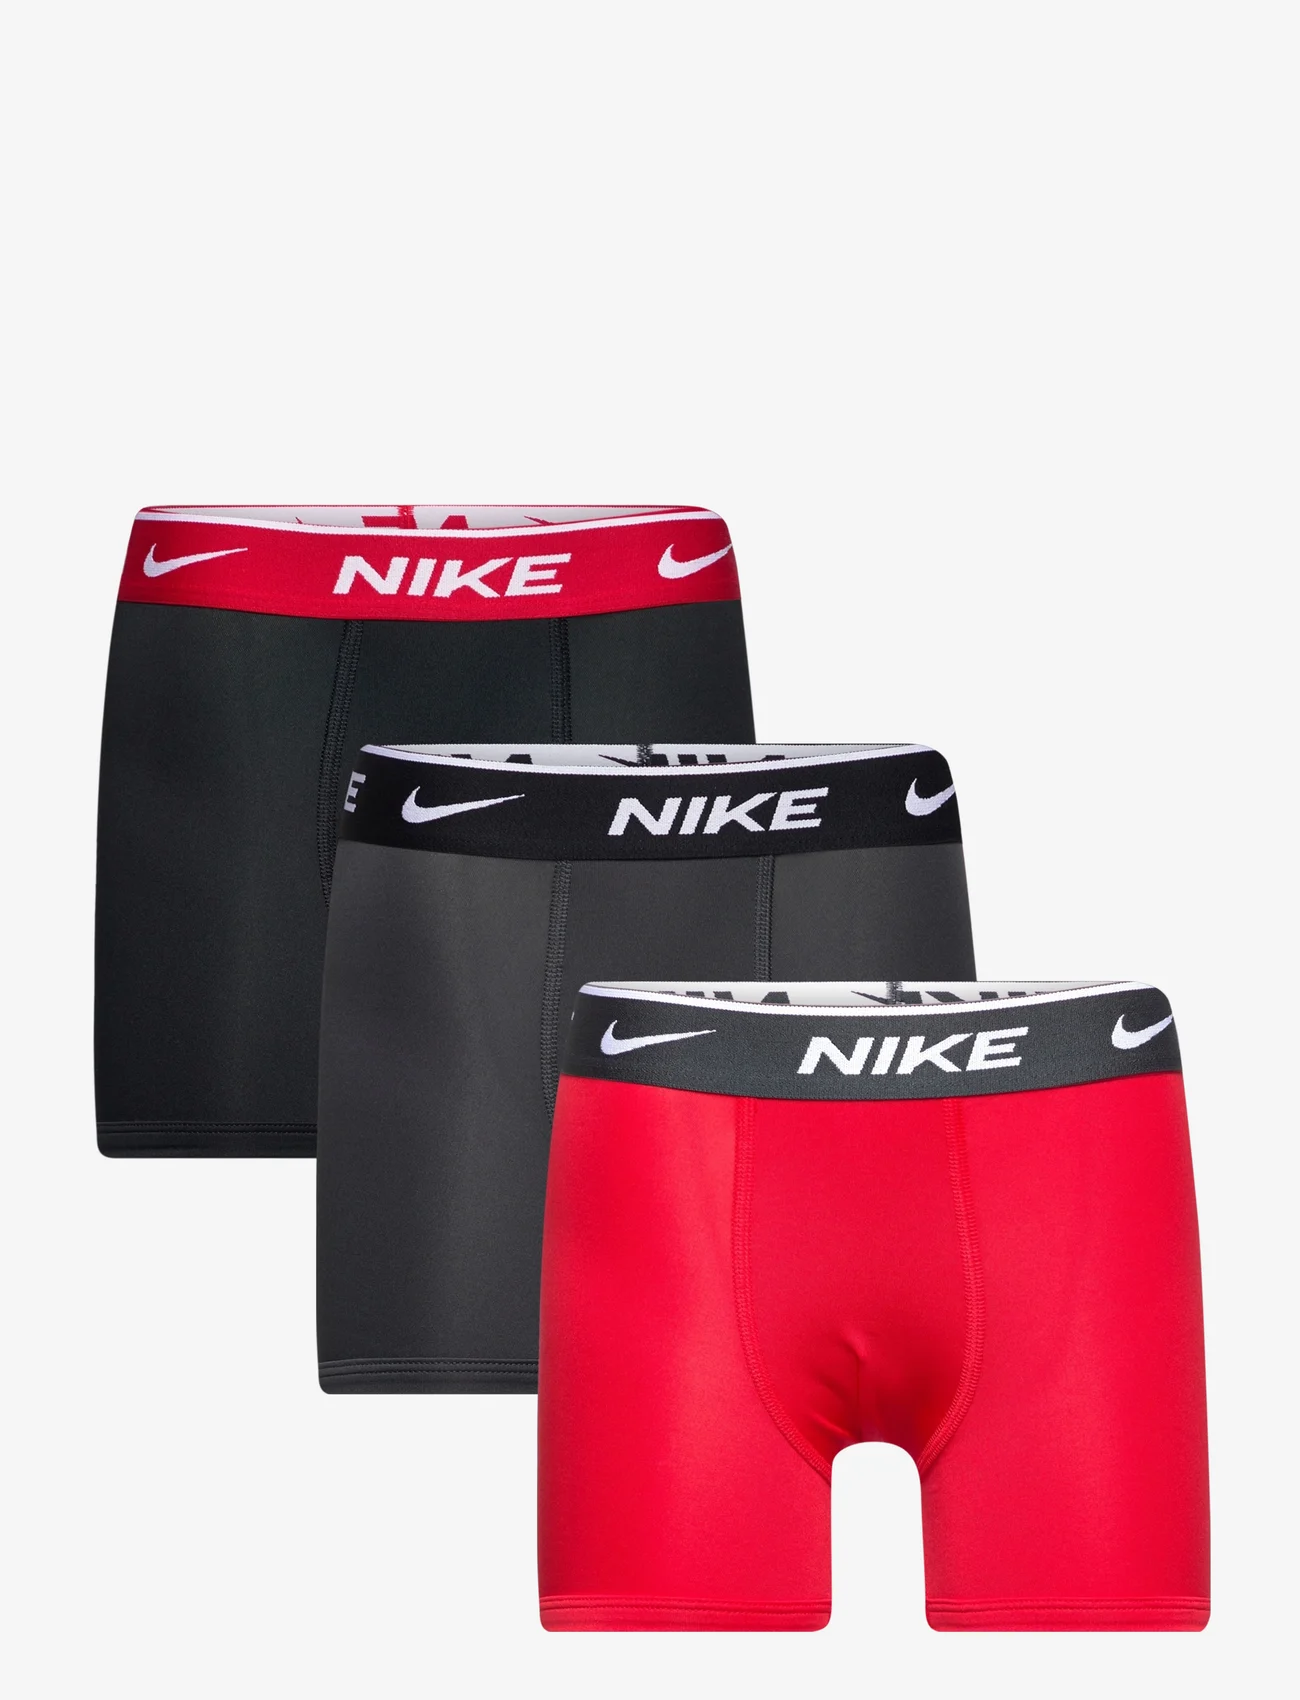 Nike - NHB NHB E DAY COTTON STRETCH 3 / NHB NHB E DAY COTTON STRETC - underpants - university red - 0